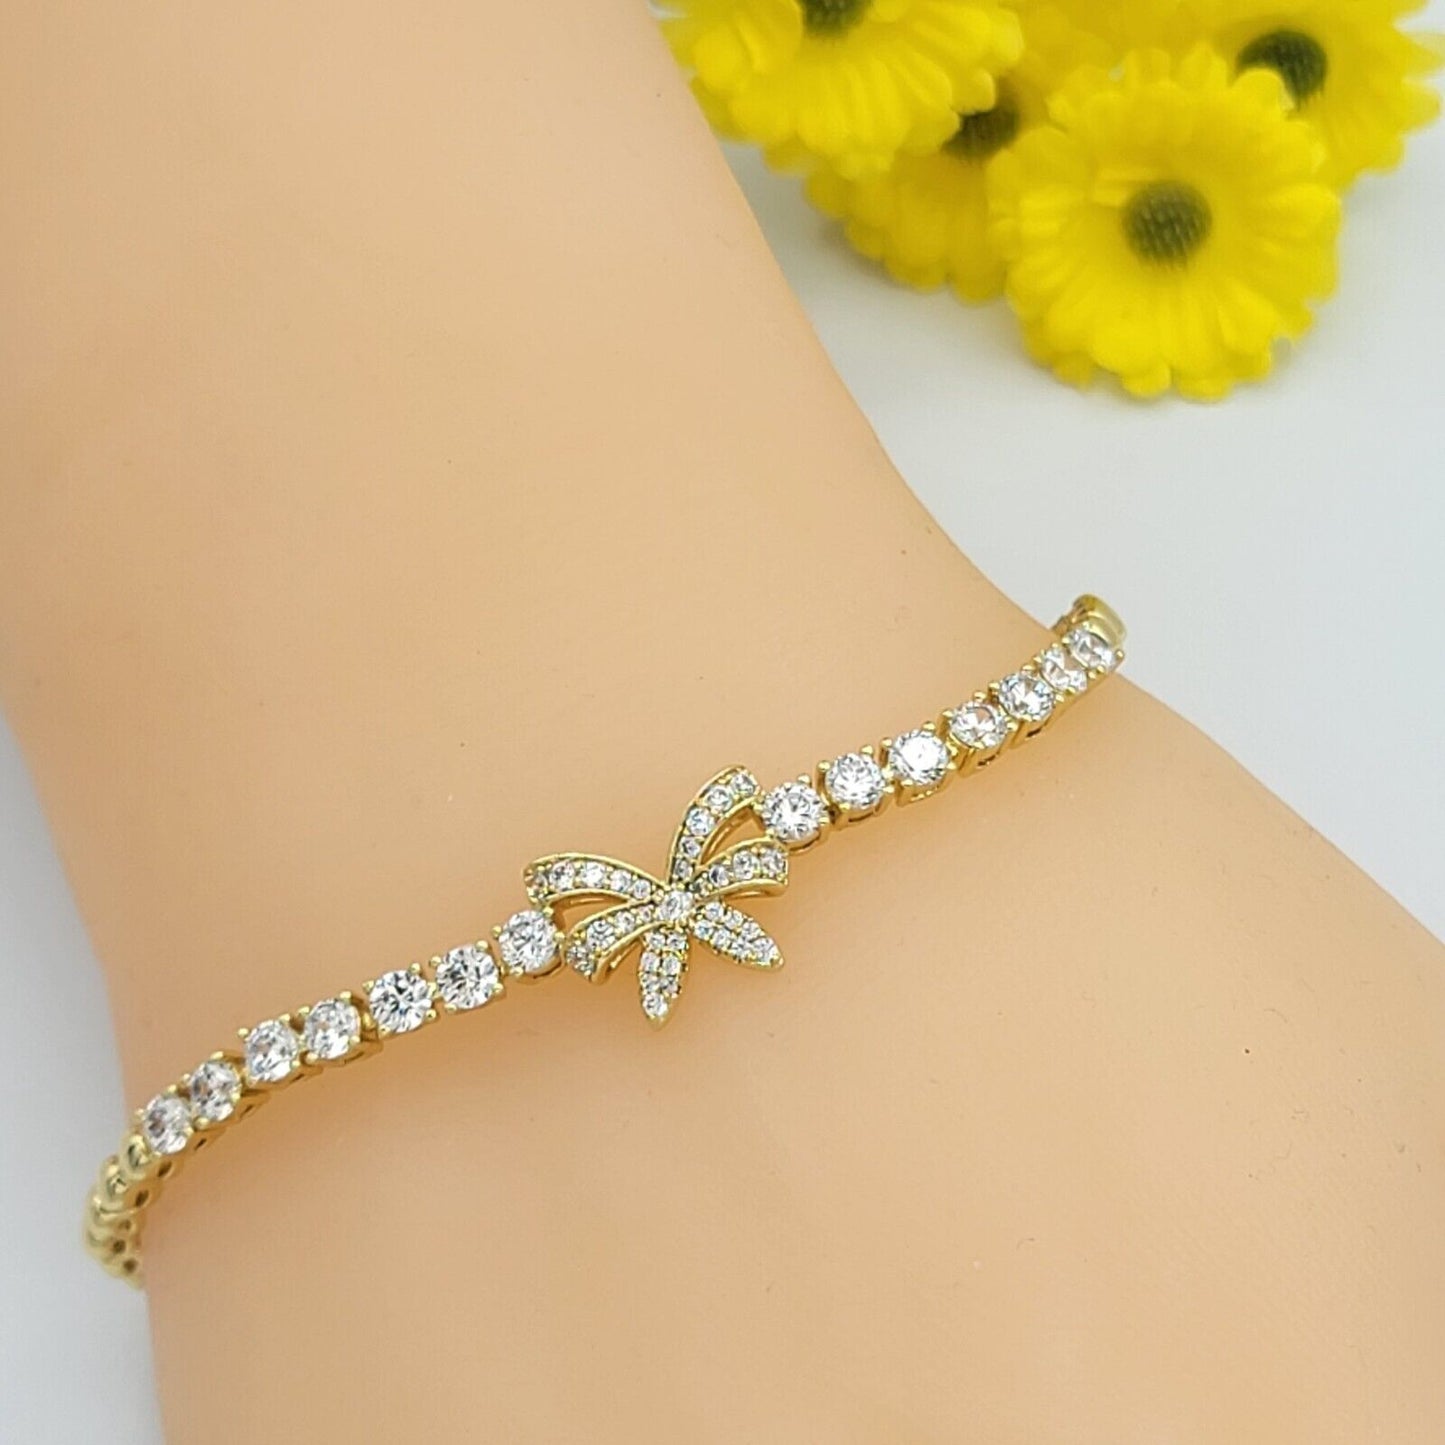 Bracelets - 14K Gold Plated. Clear Crystals Bow Gift Bracelet. Cute Elegant